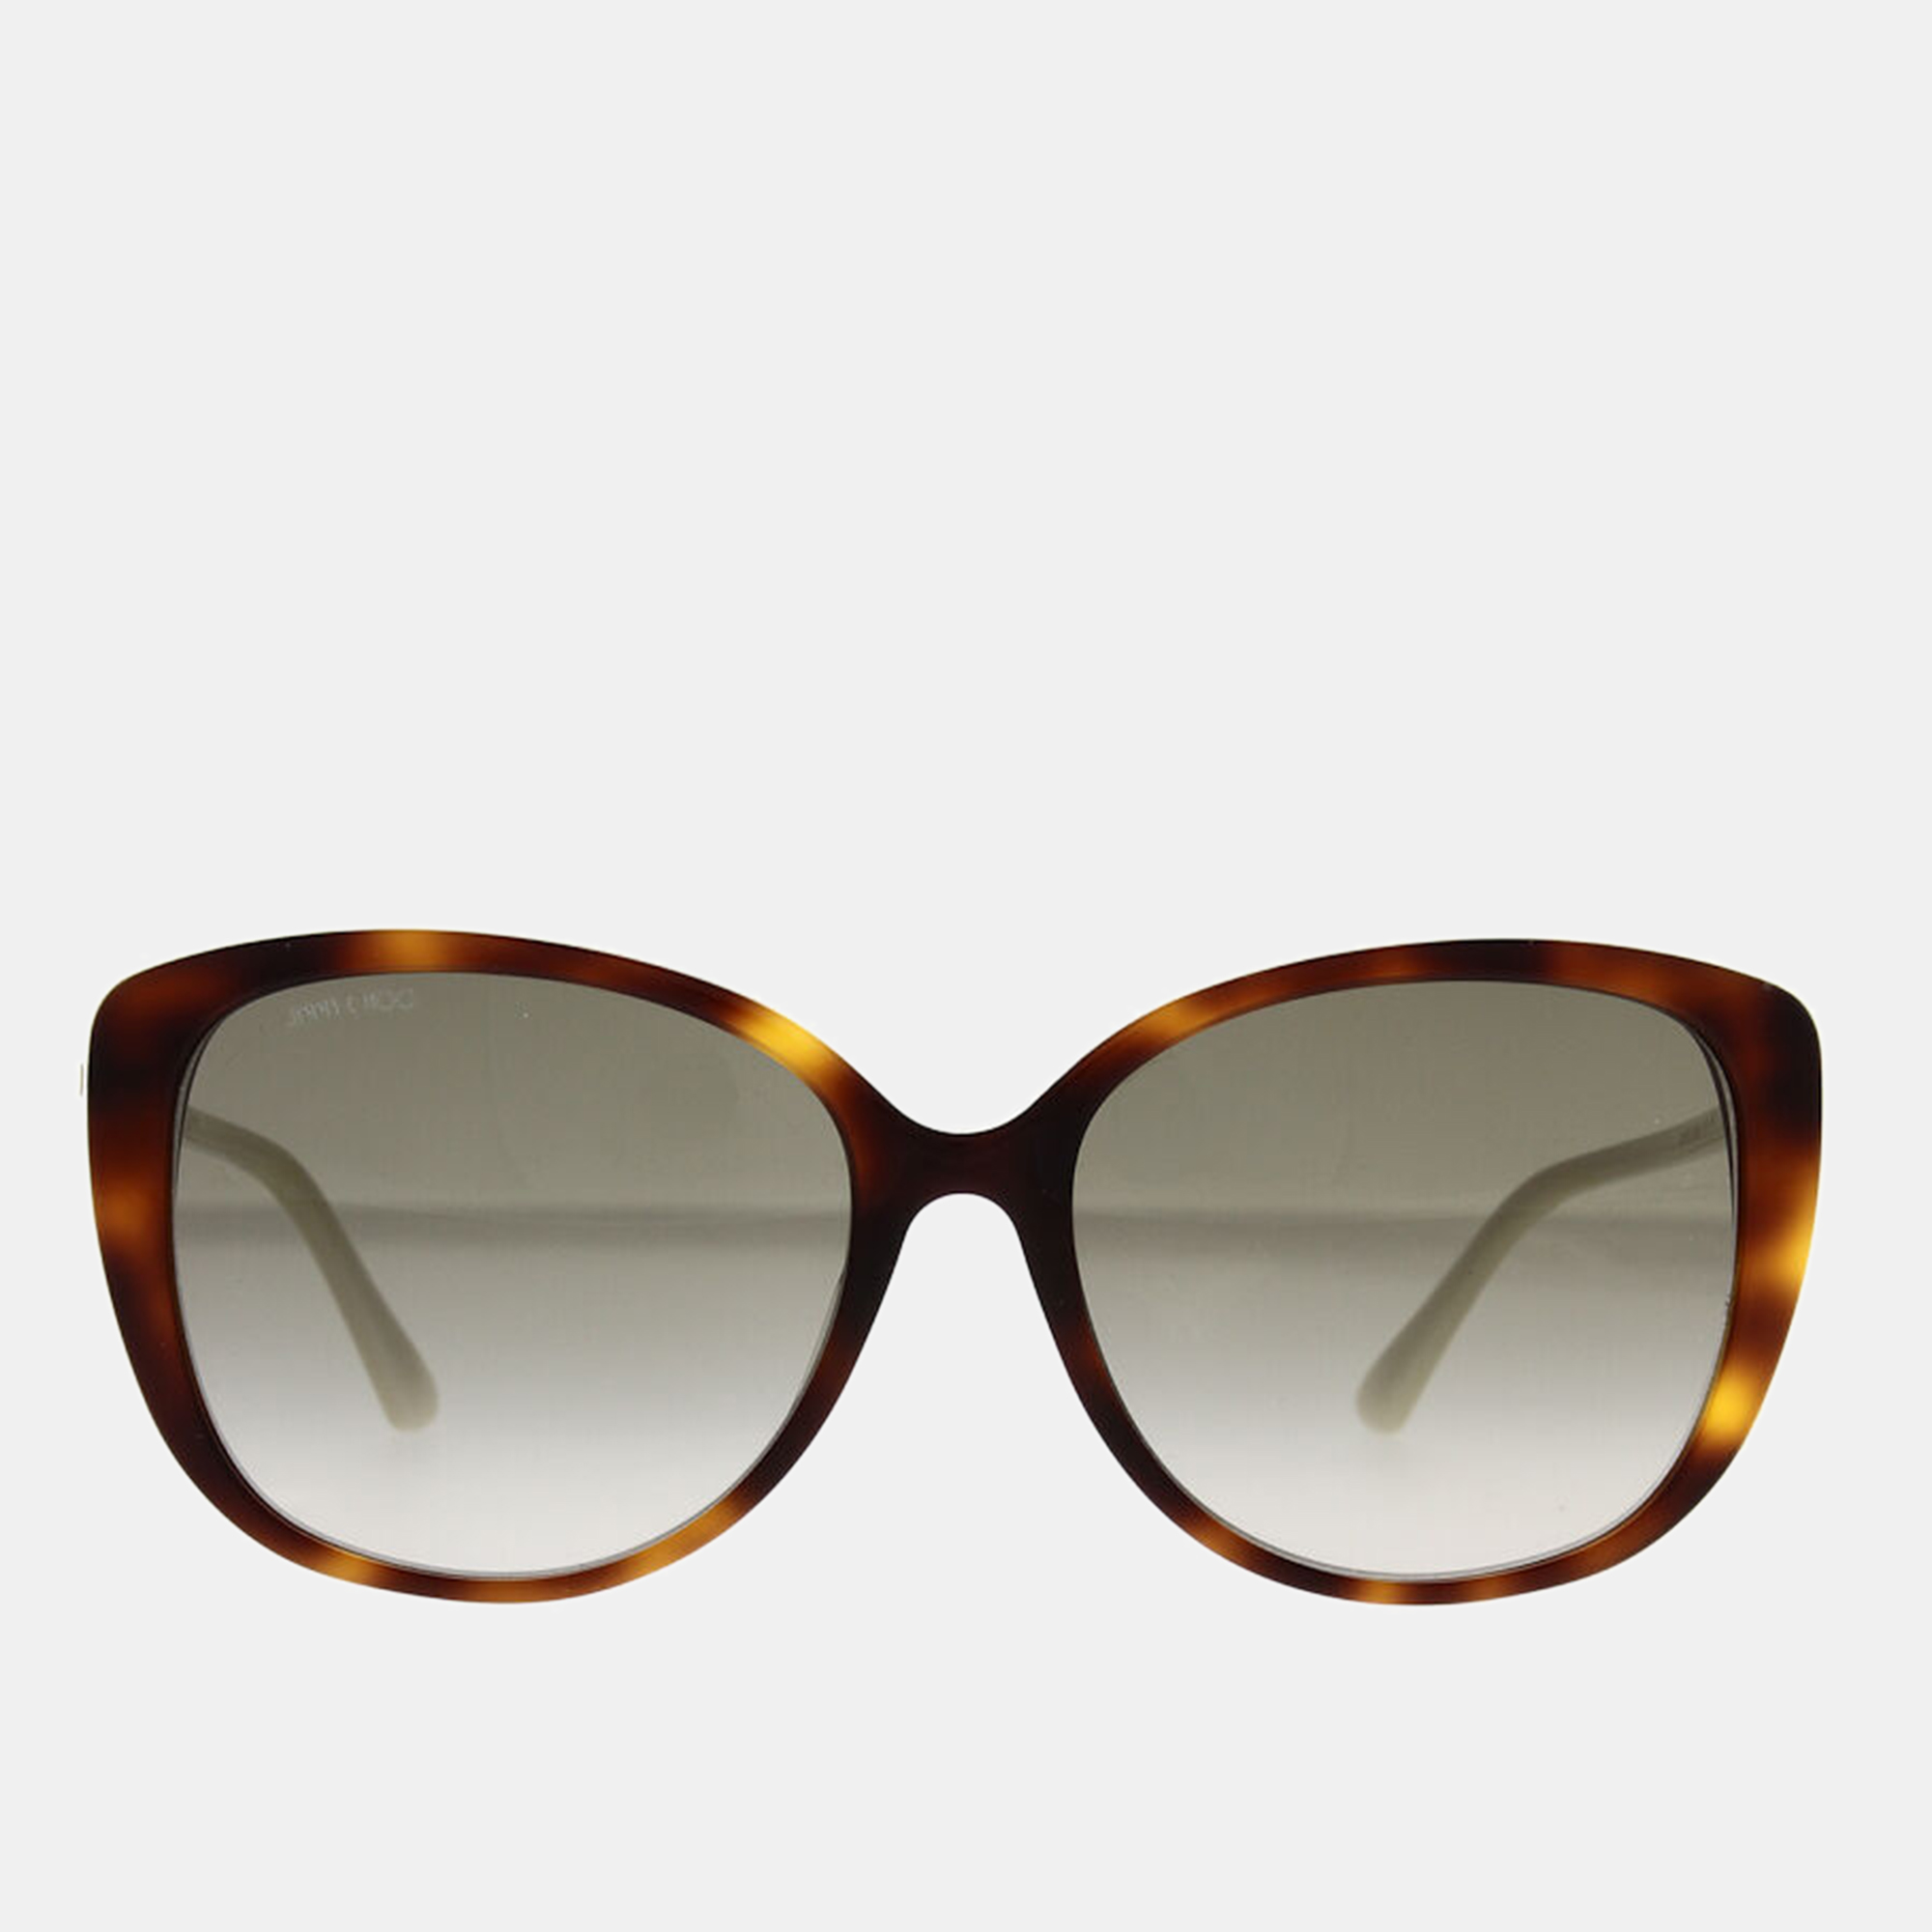 Pre-owned Jimmy Choo Grey Gold Shelby Cat Eye Women's Sunglasses 57mm